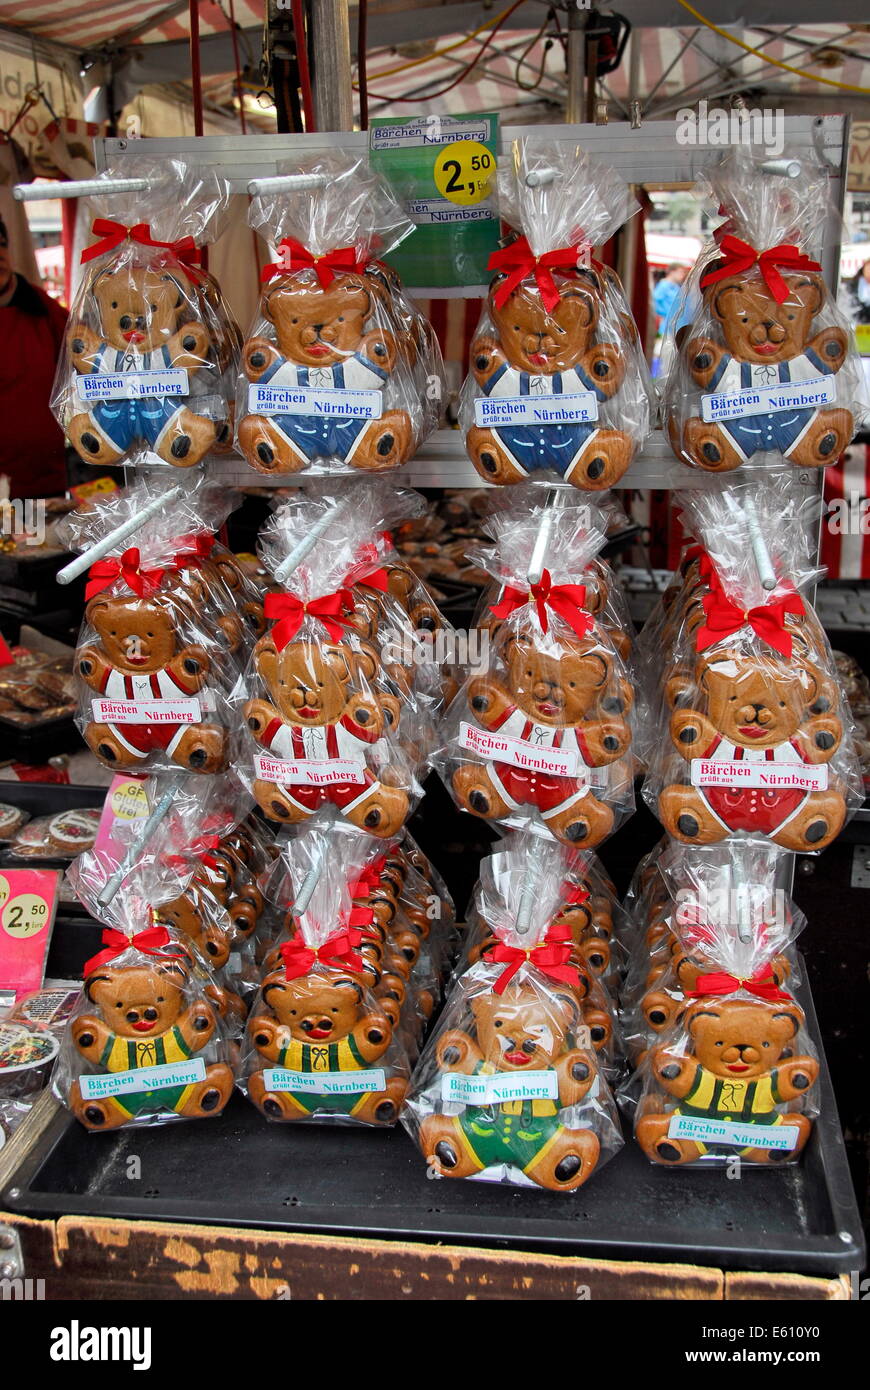 Market place selling gingerbread cookies in Nuremberg, Germany Stock ...